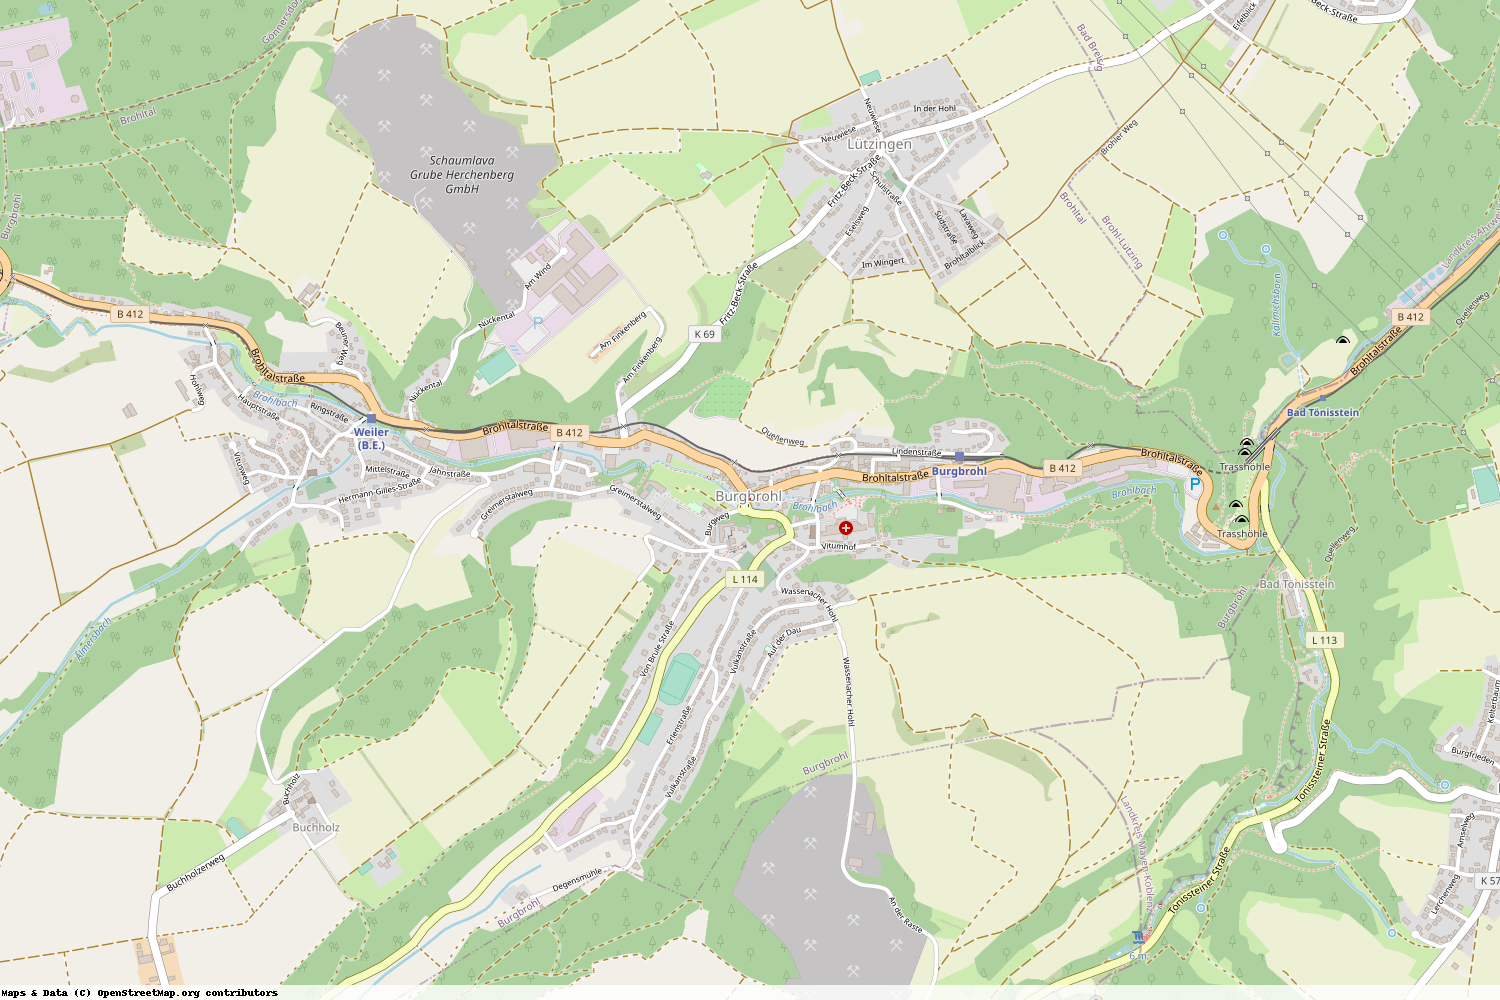 Ist gerade Stromausfall in Rheinland-Pfalz - Ahrweiler - Burgbrohl?